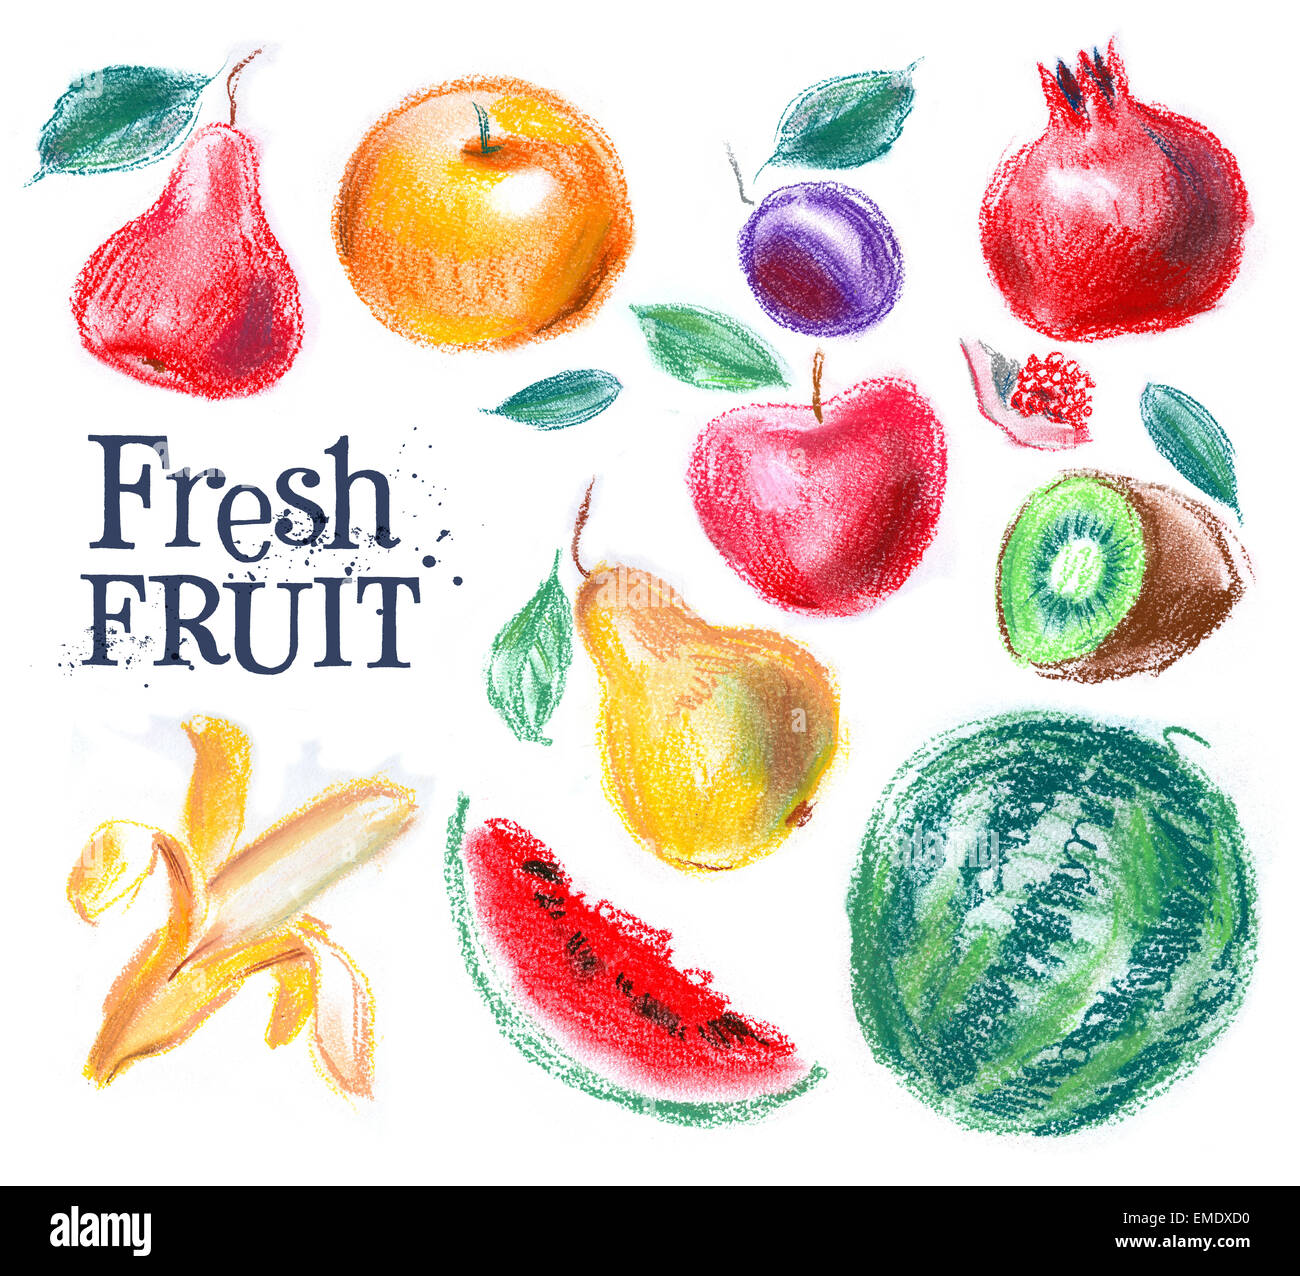 fresh fruit on a white background Stock Photo